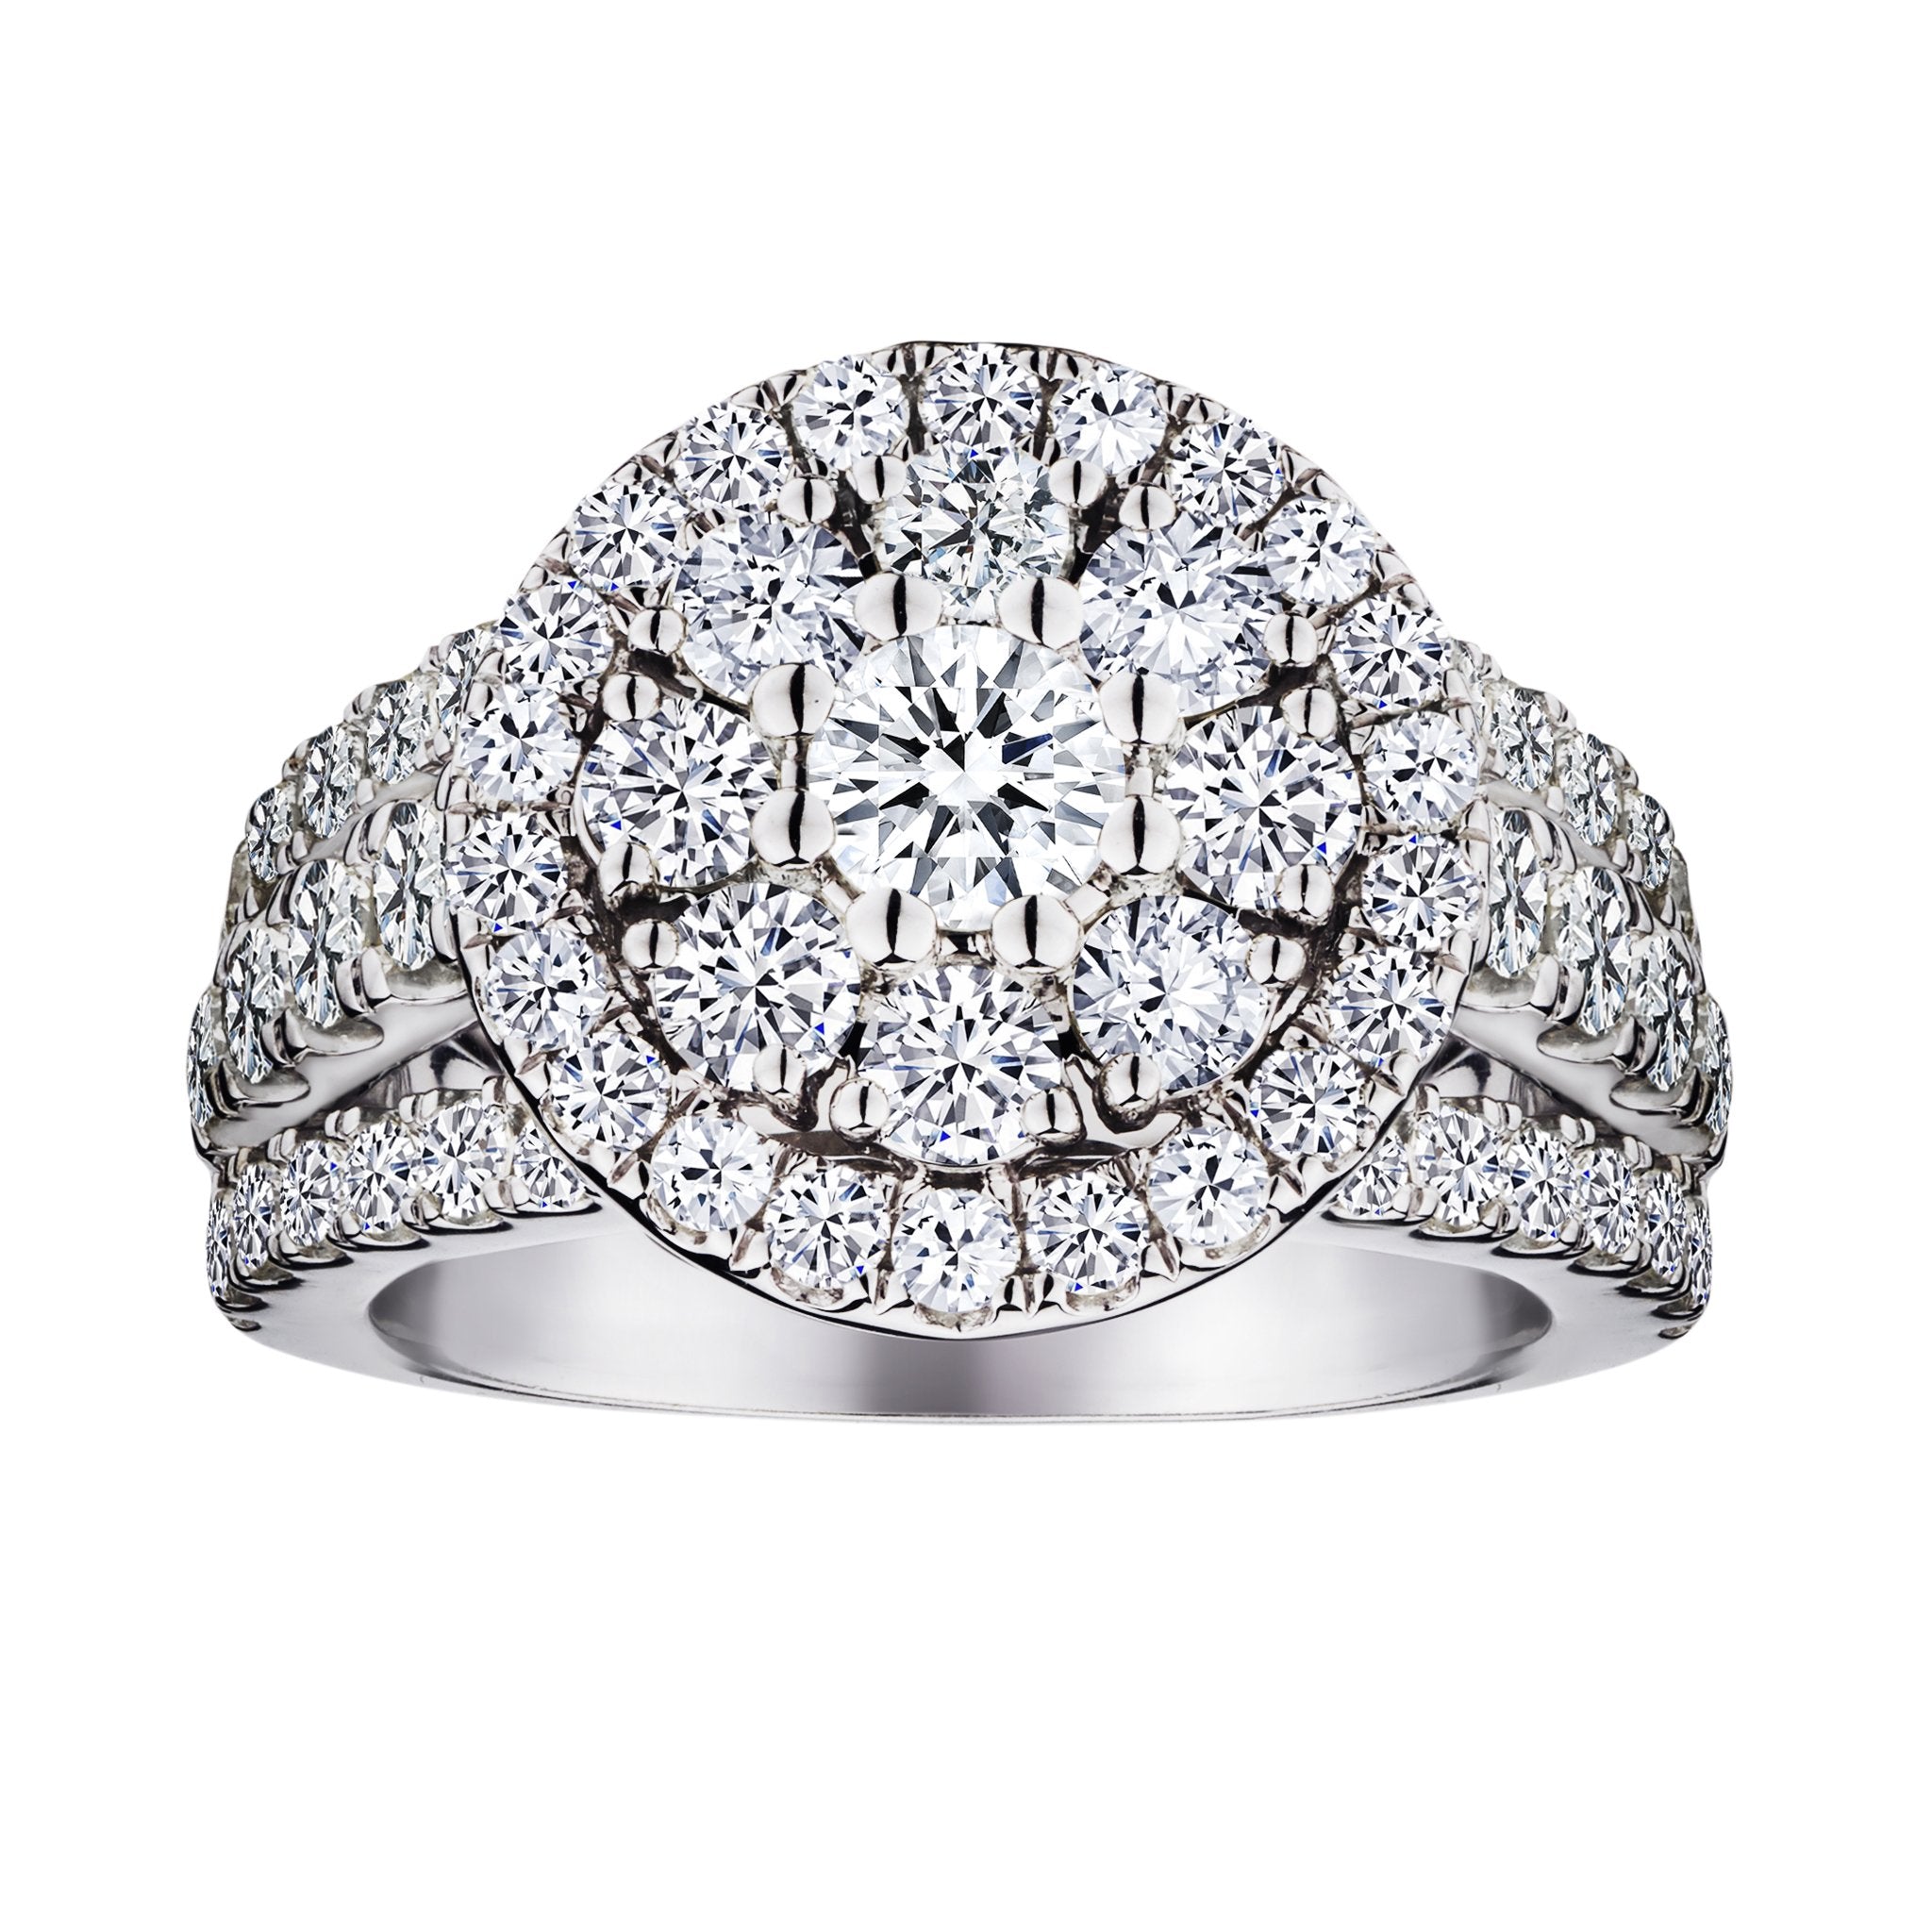 3.00 Carat Diamond Ring,  10kt White Gold. Griffin Jewellery Designs